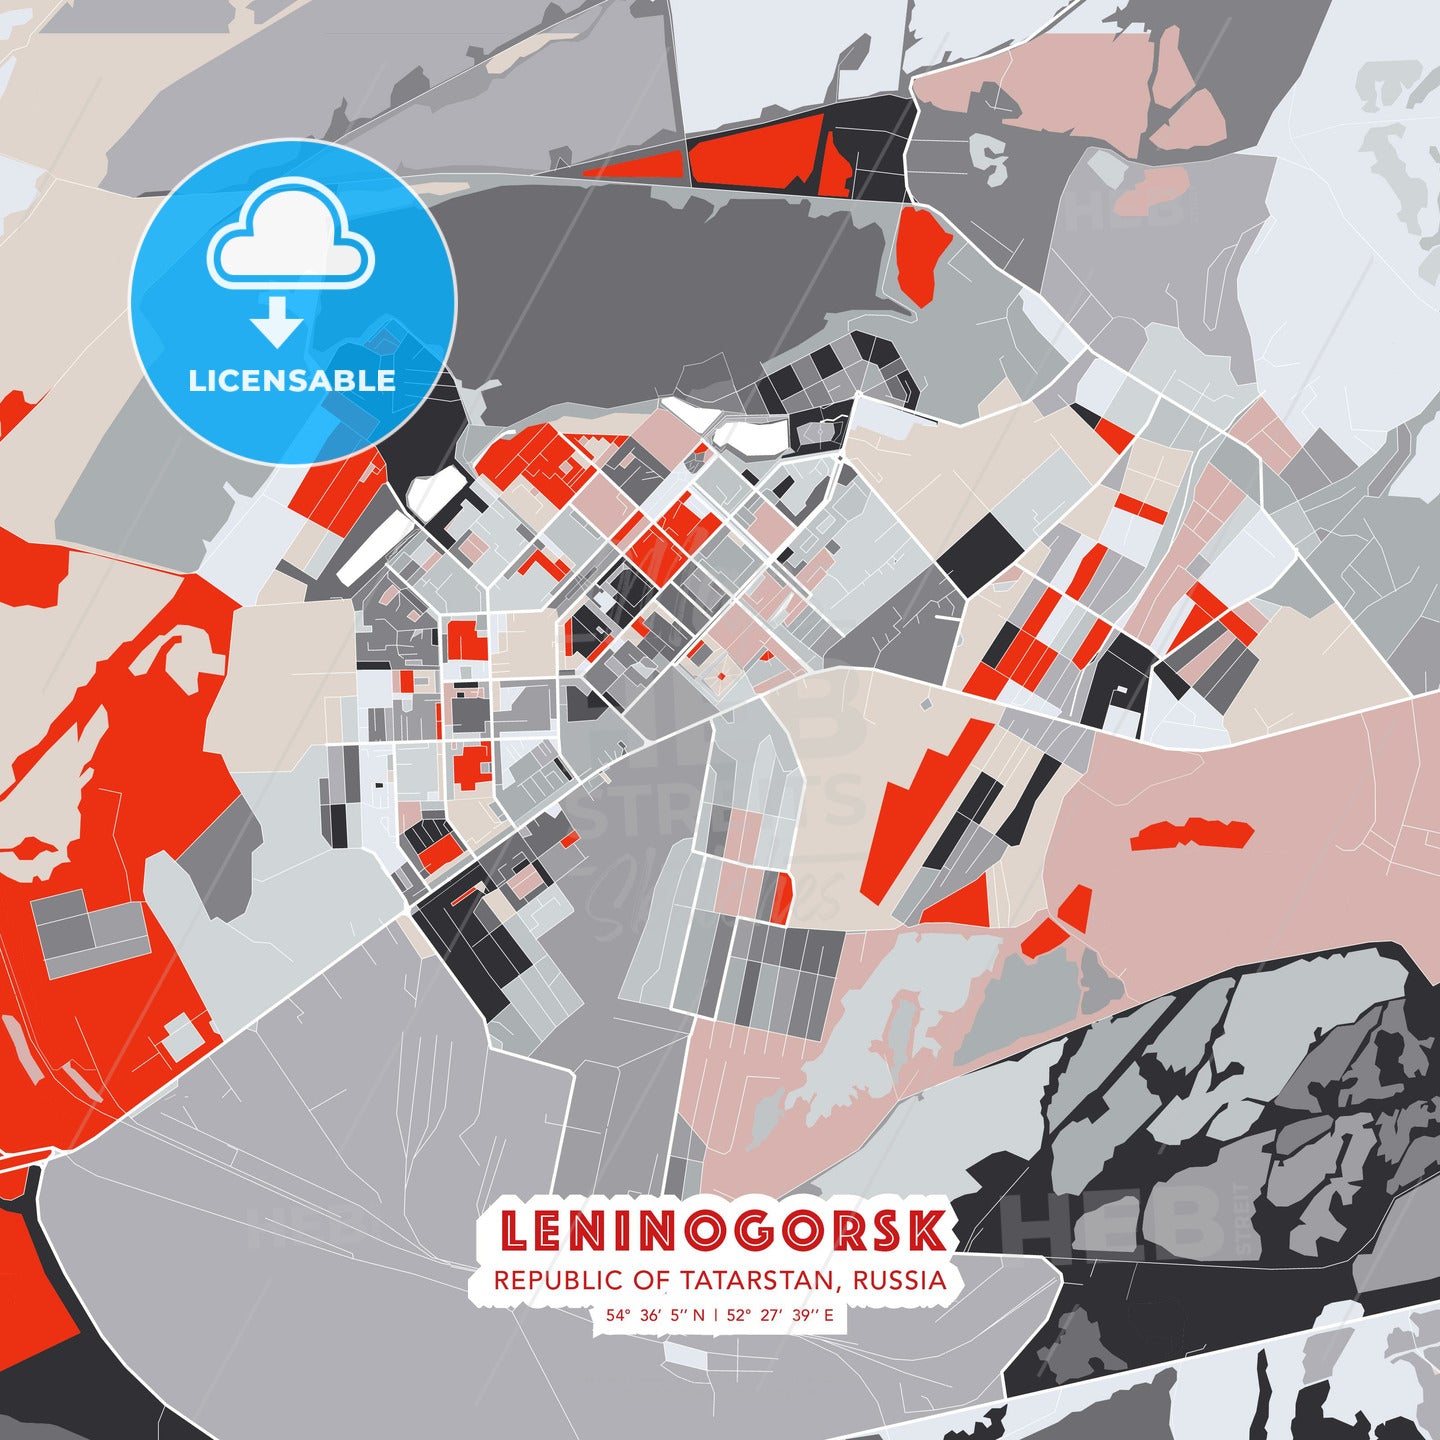 Leninogorsk, Republic of Tatarstan, Russia, modern map - HEBSTREITS Sketches